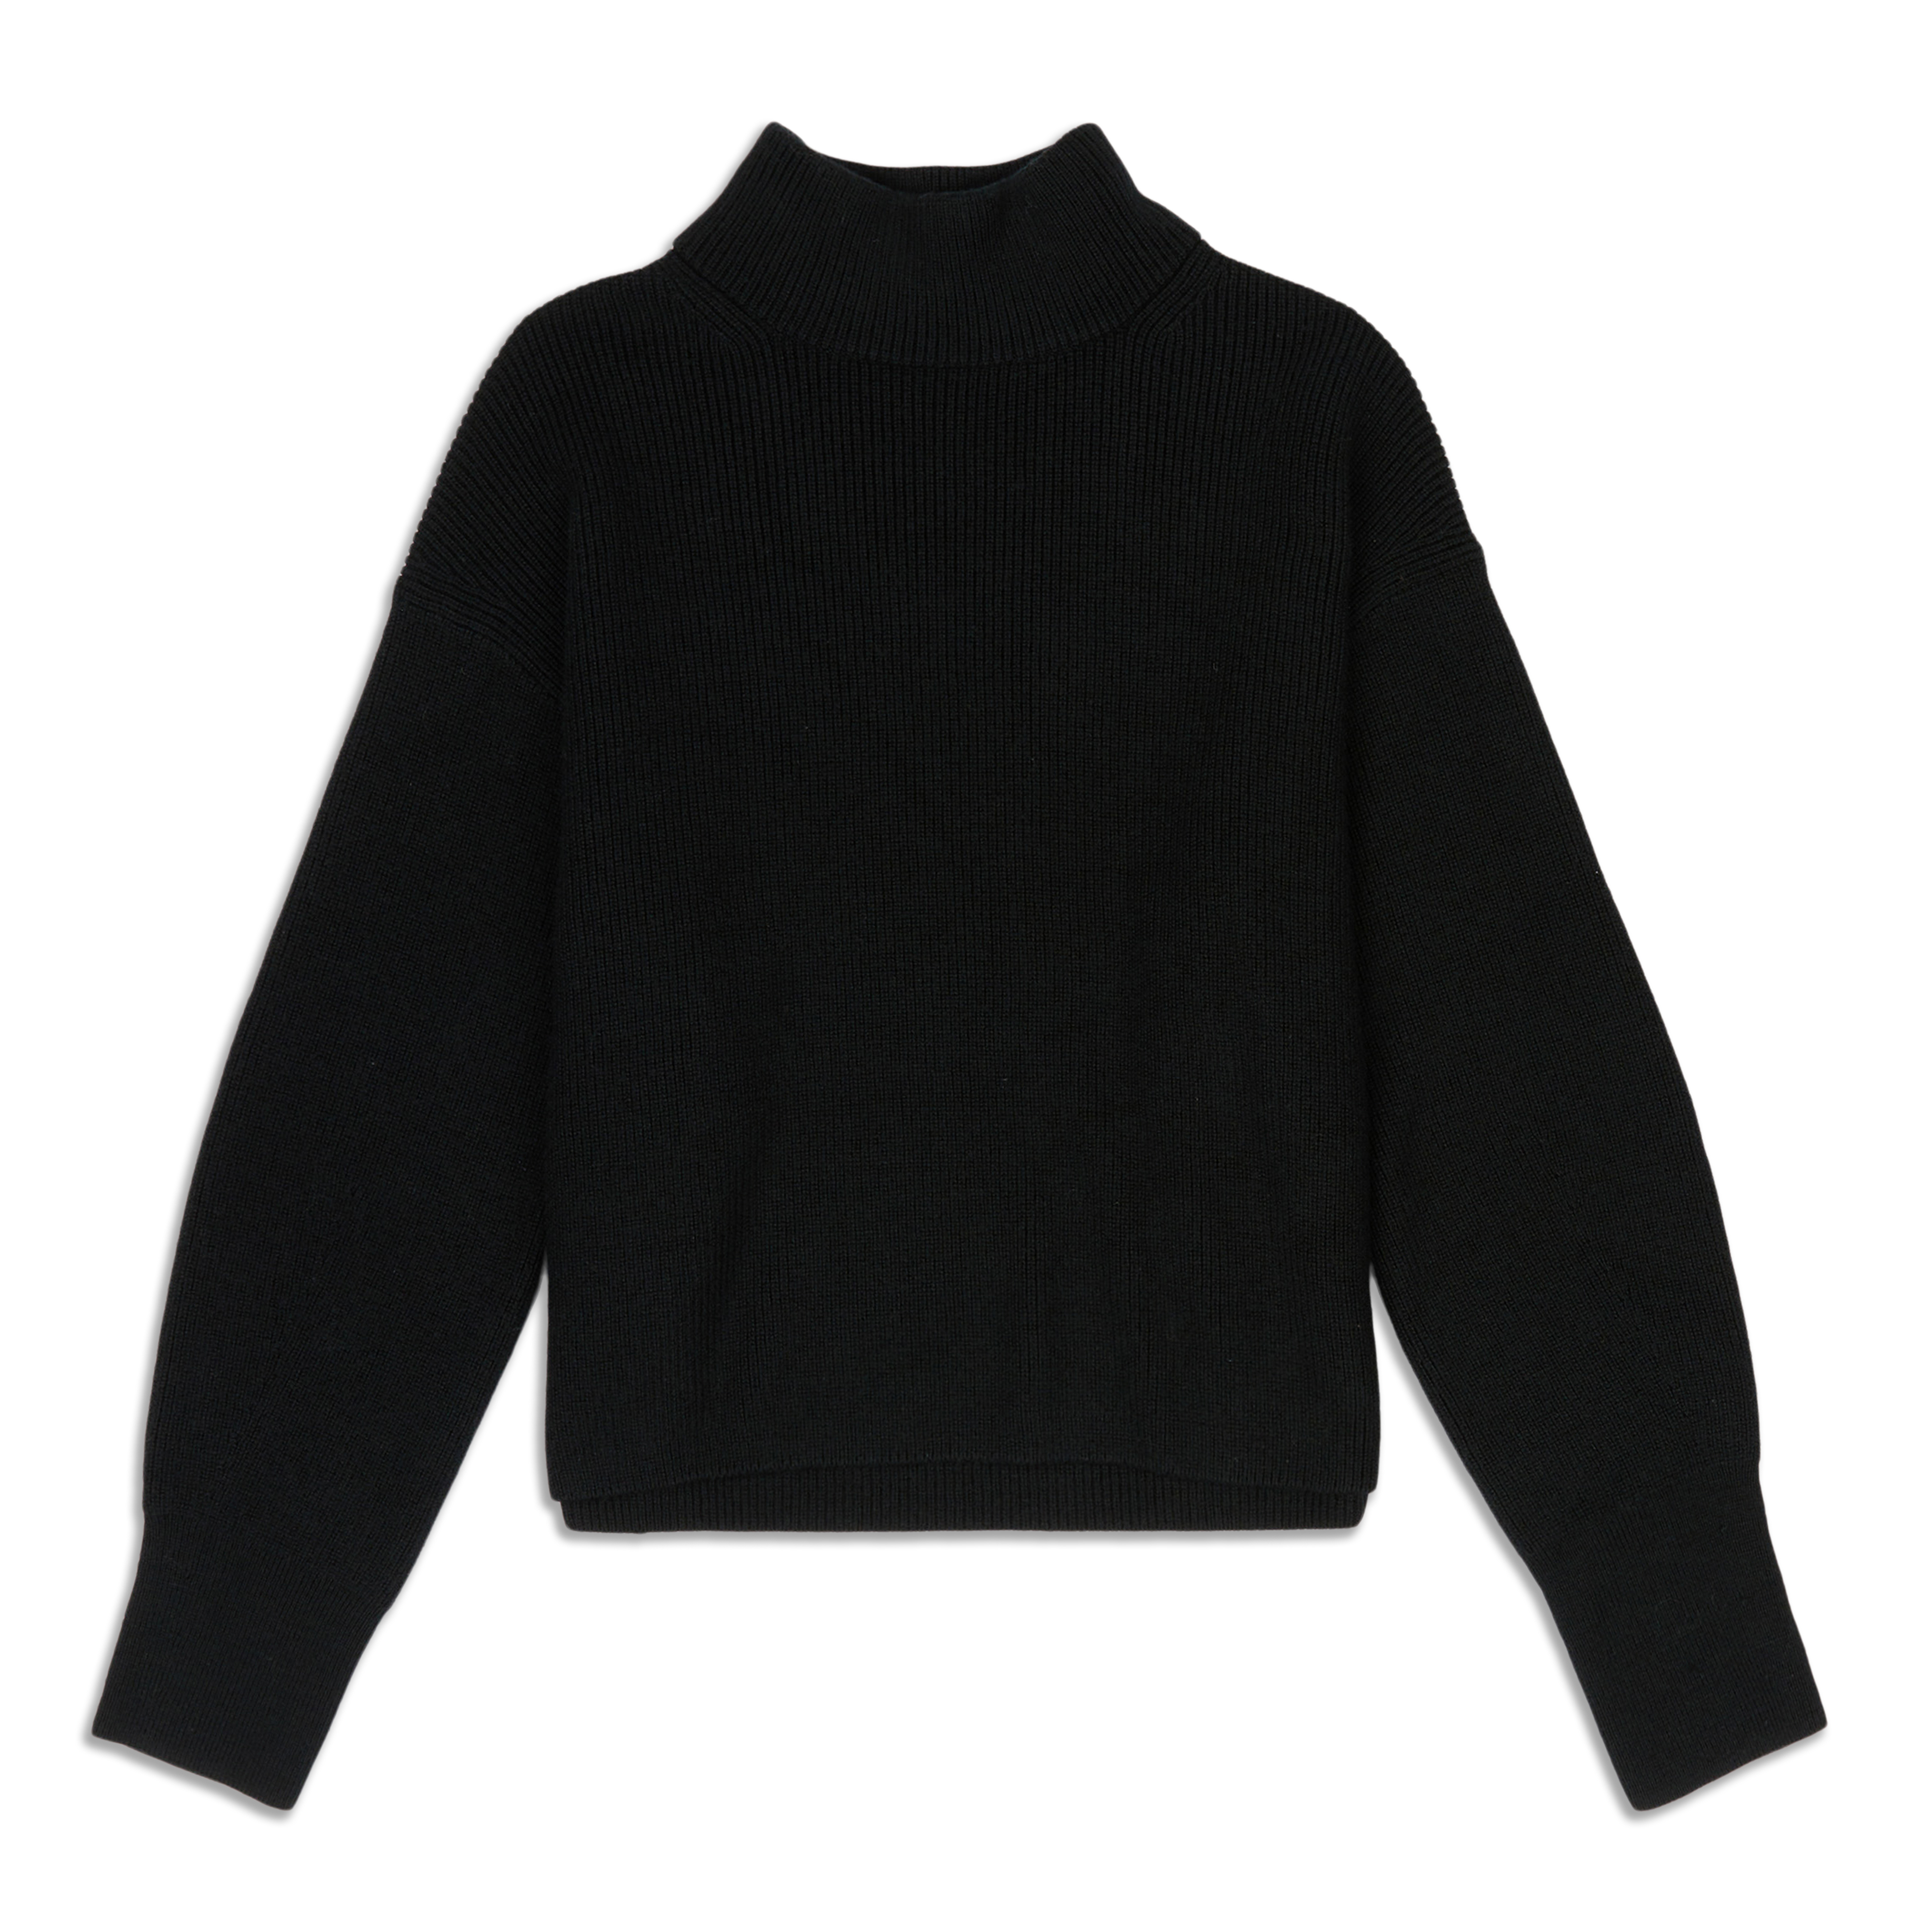 Lululemon Merino Wool-Blend Ribbed Turtleneck Sweater - Heathered Natural  Ivory - lulu fanatics